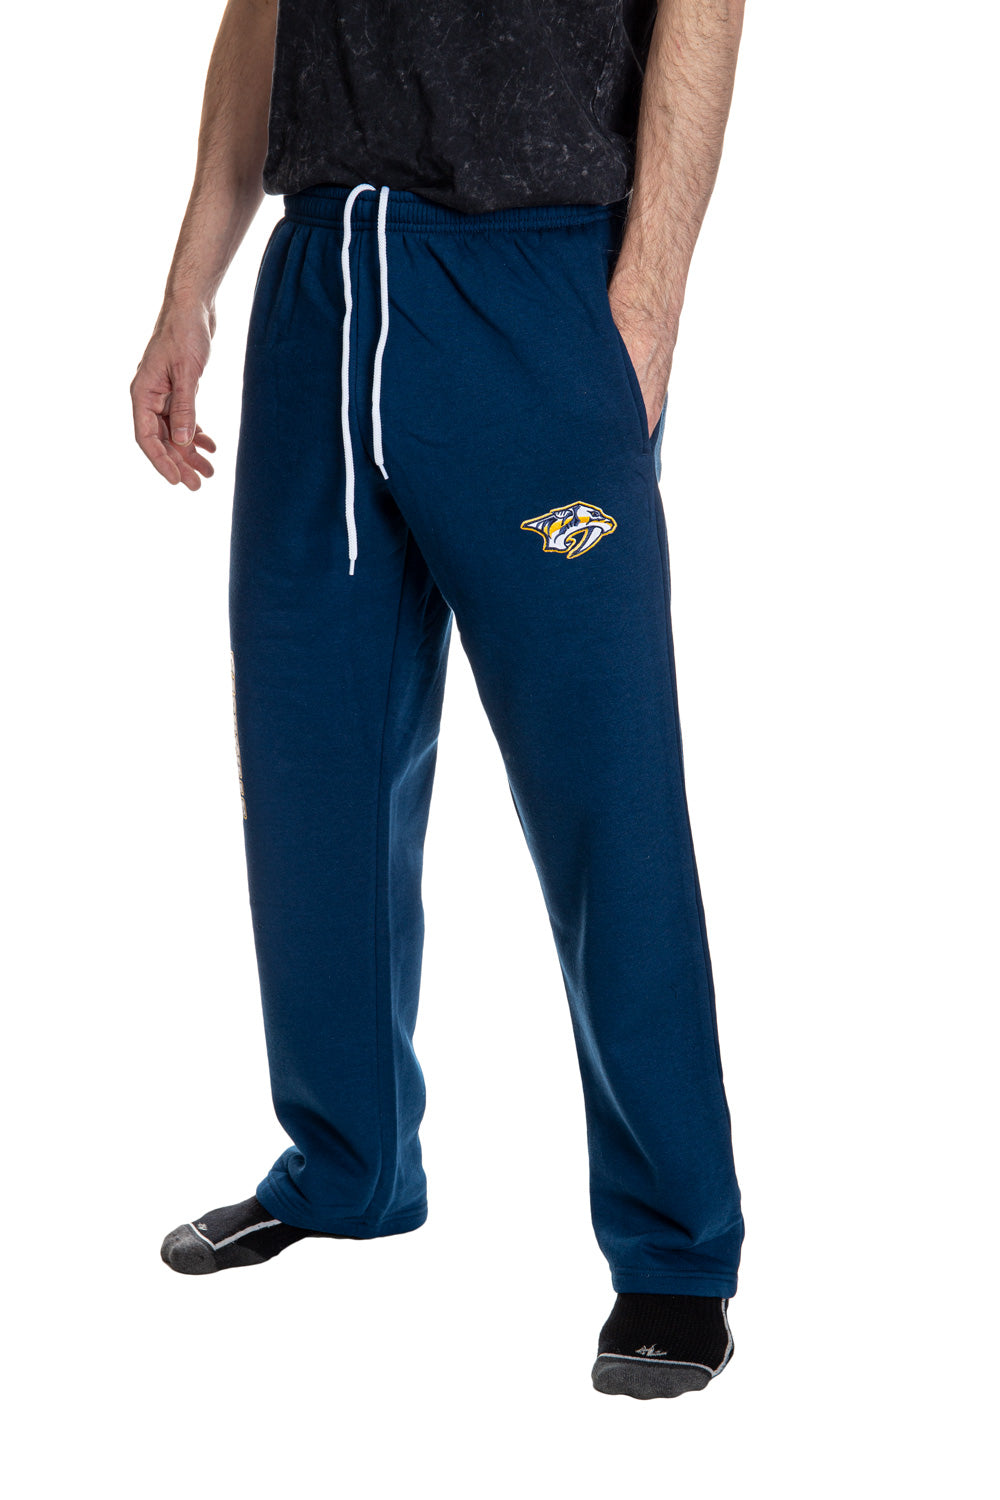 Nashville Predators Premium Fleece Sweatpants Side View of Embroidered Logo.